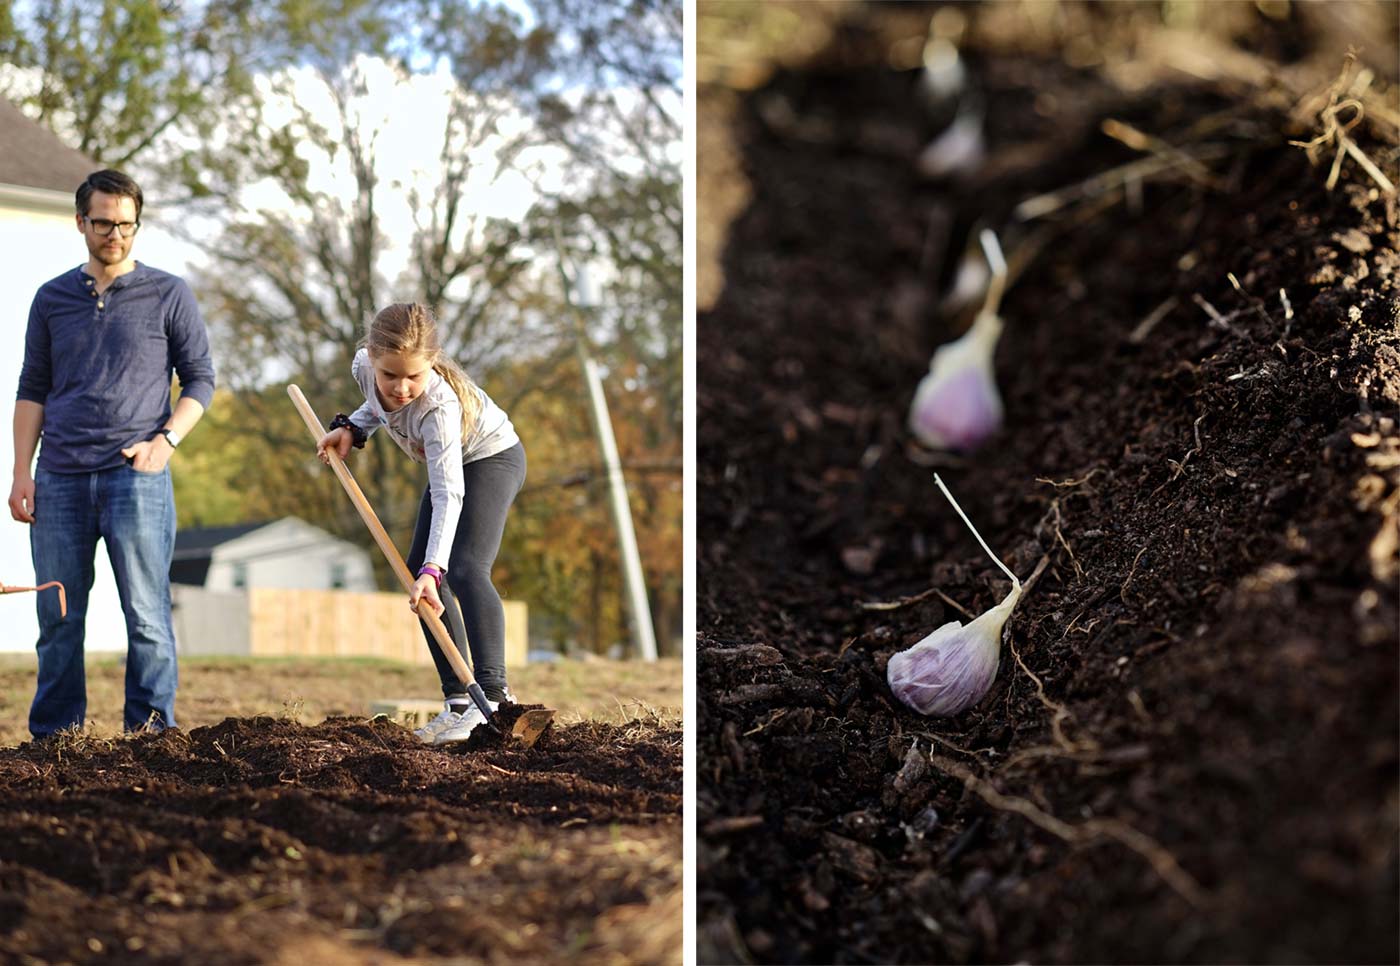 Blundering Gardener: Garlic farm experience shows contrast between